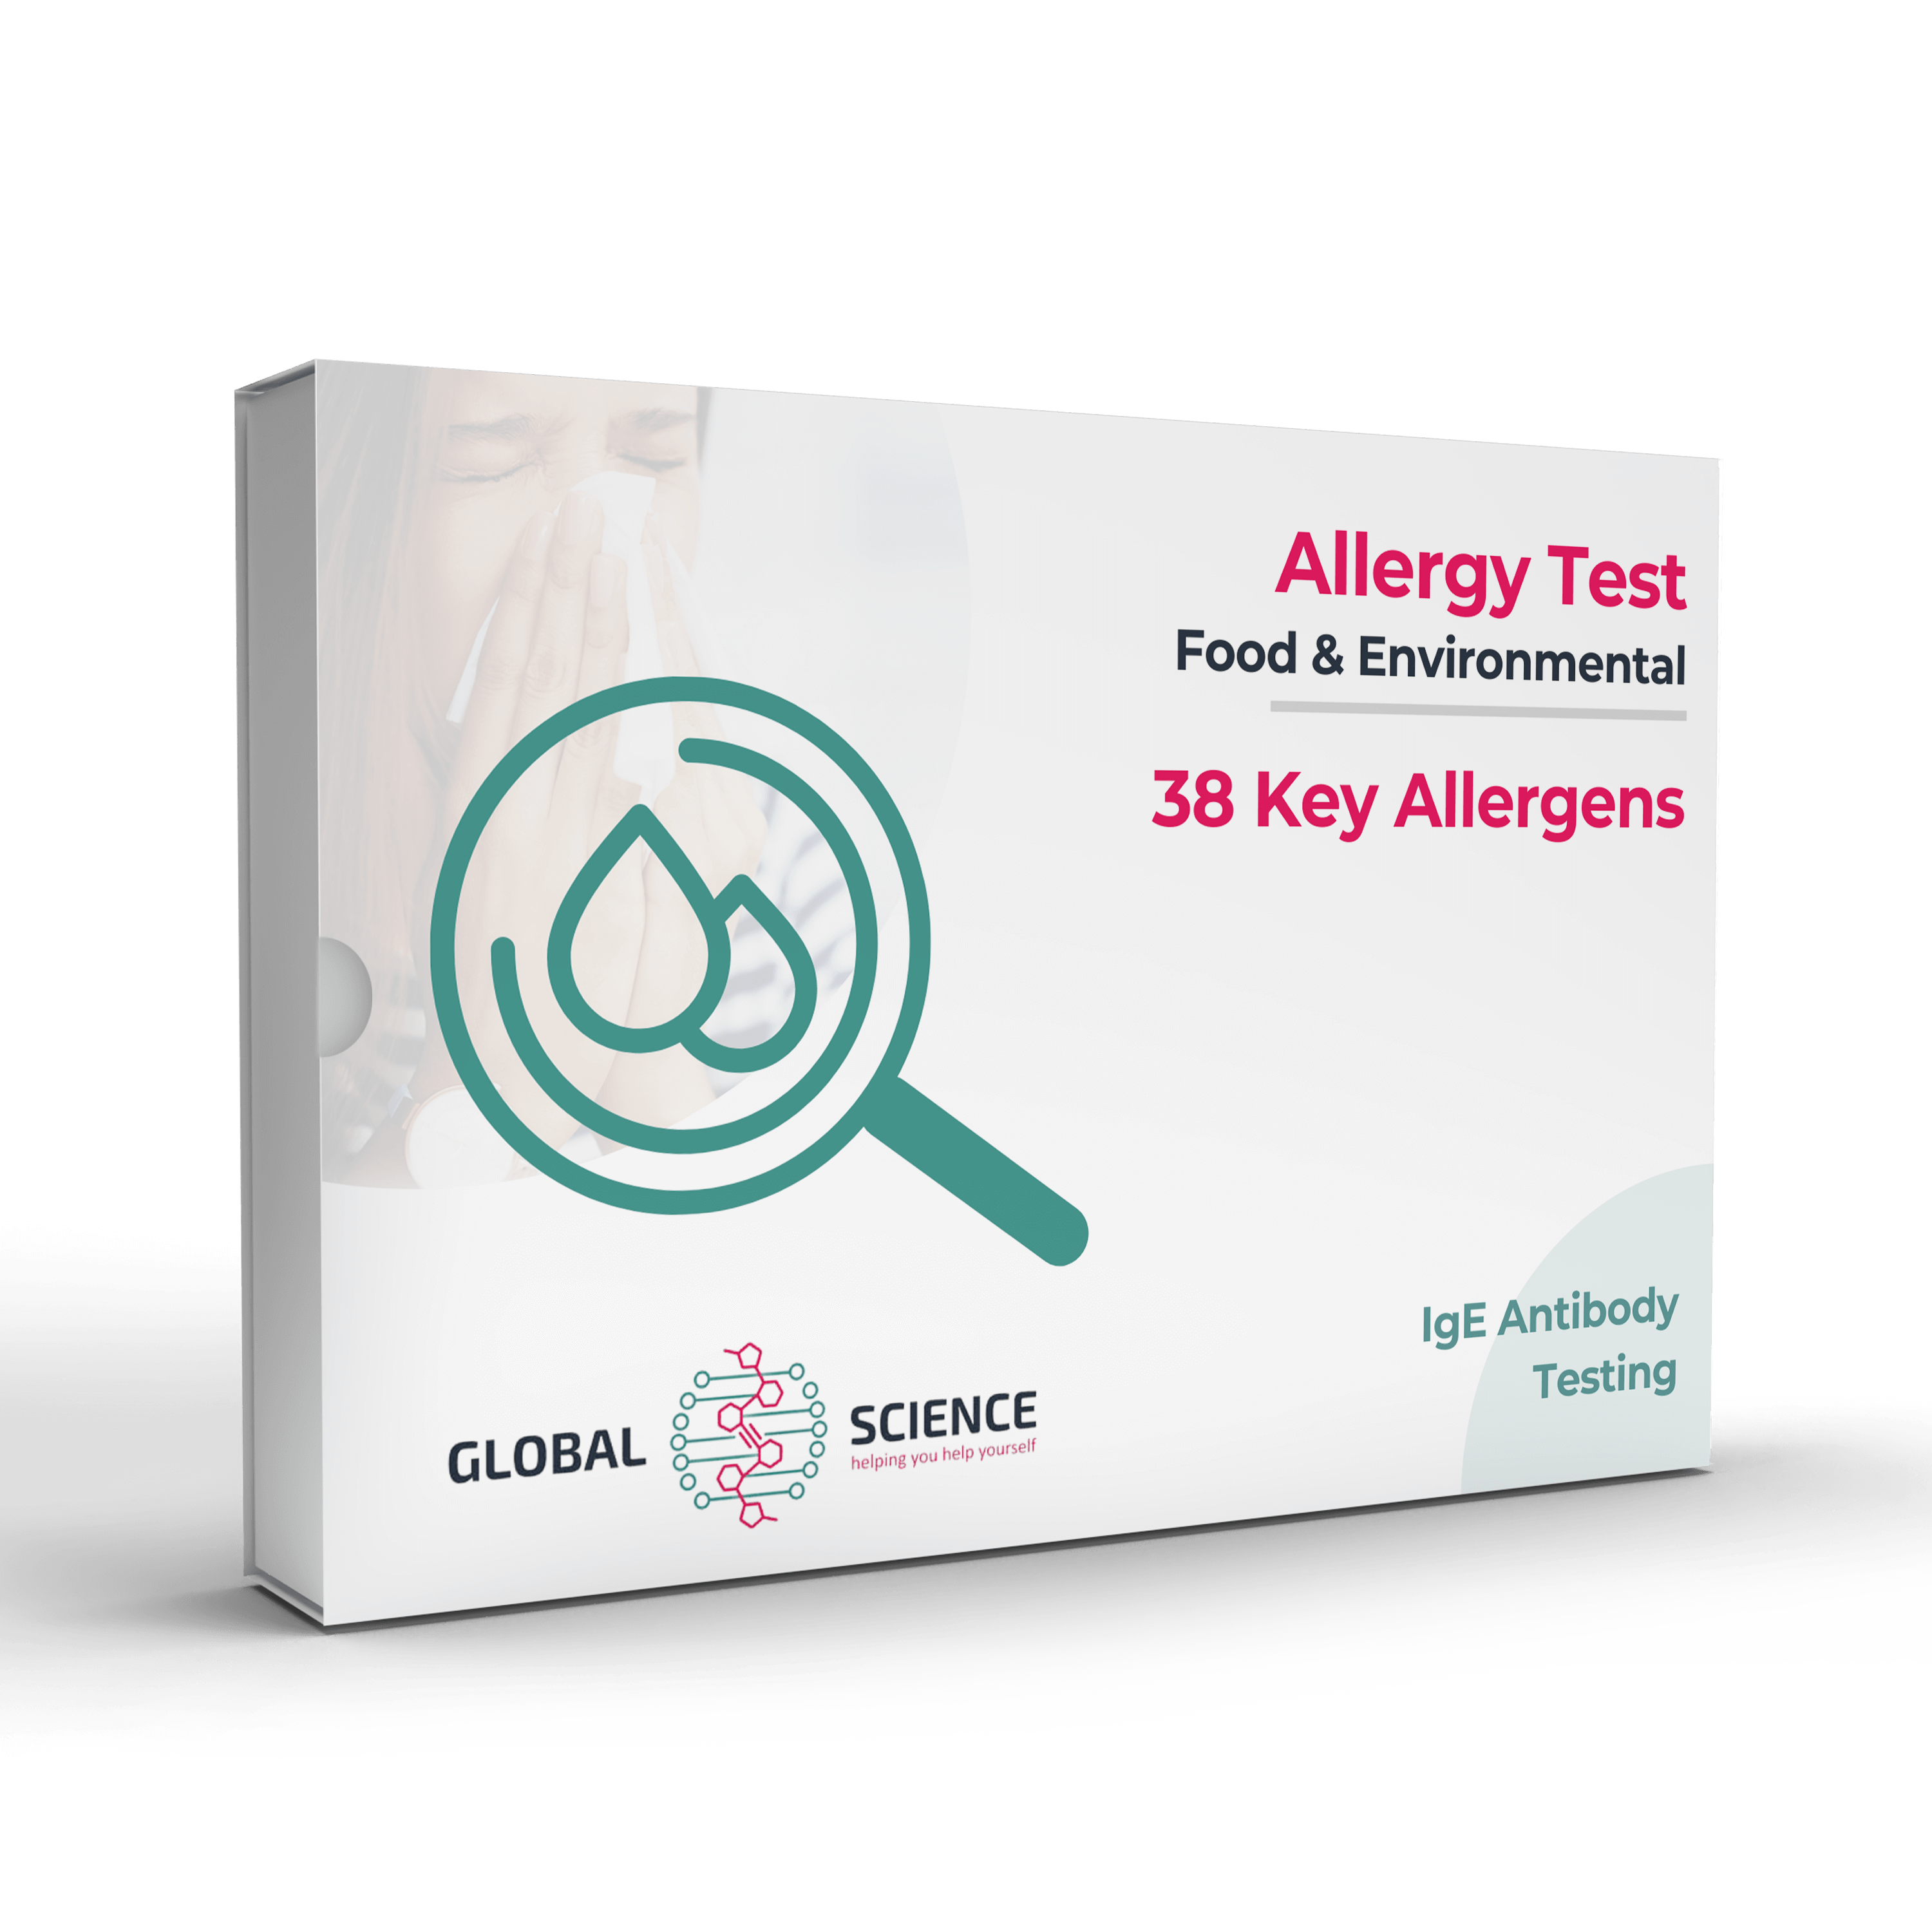 TMI TMA Allergy Test - How it works